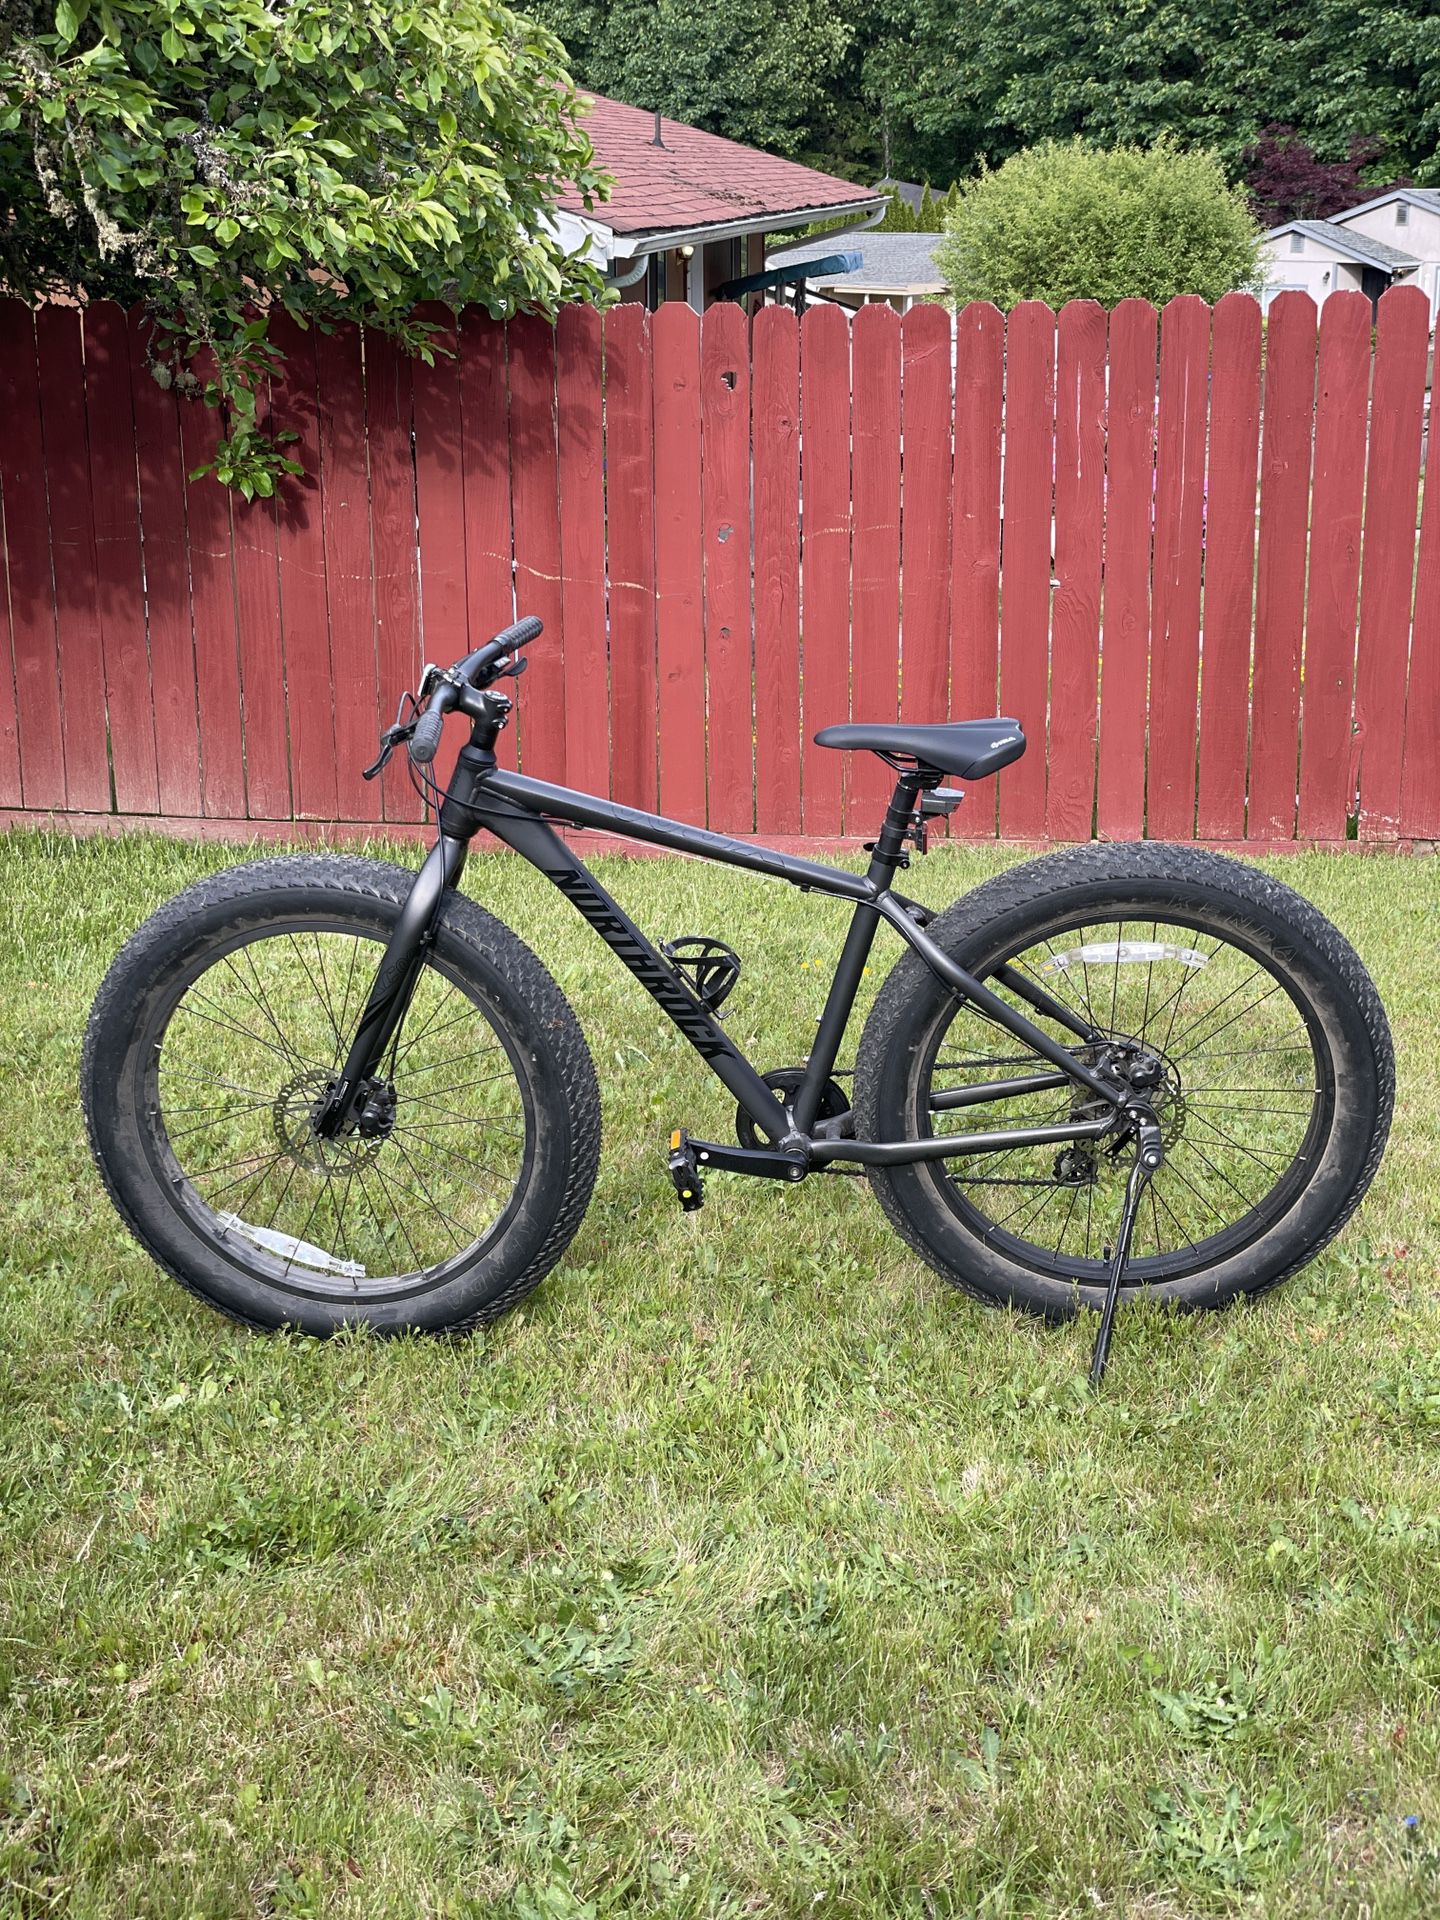 Mountain Bike - Northrock XC00 (fat tire)